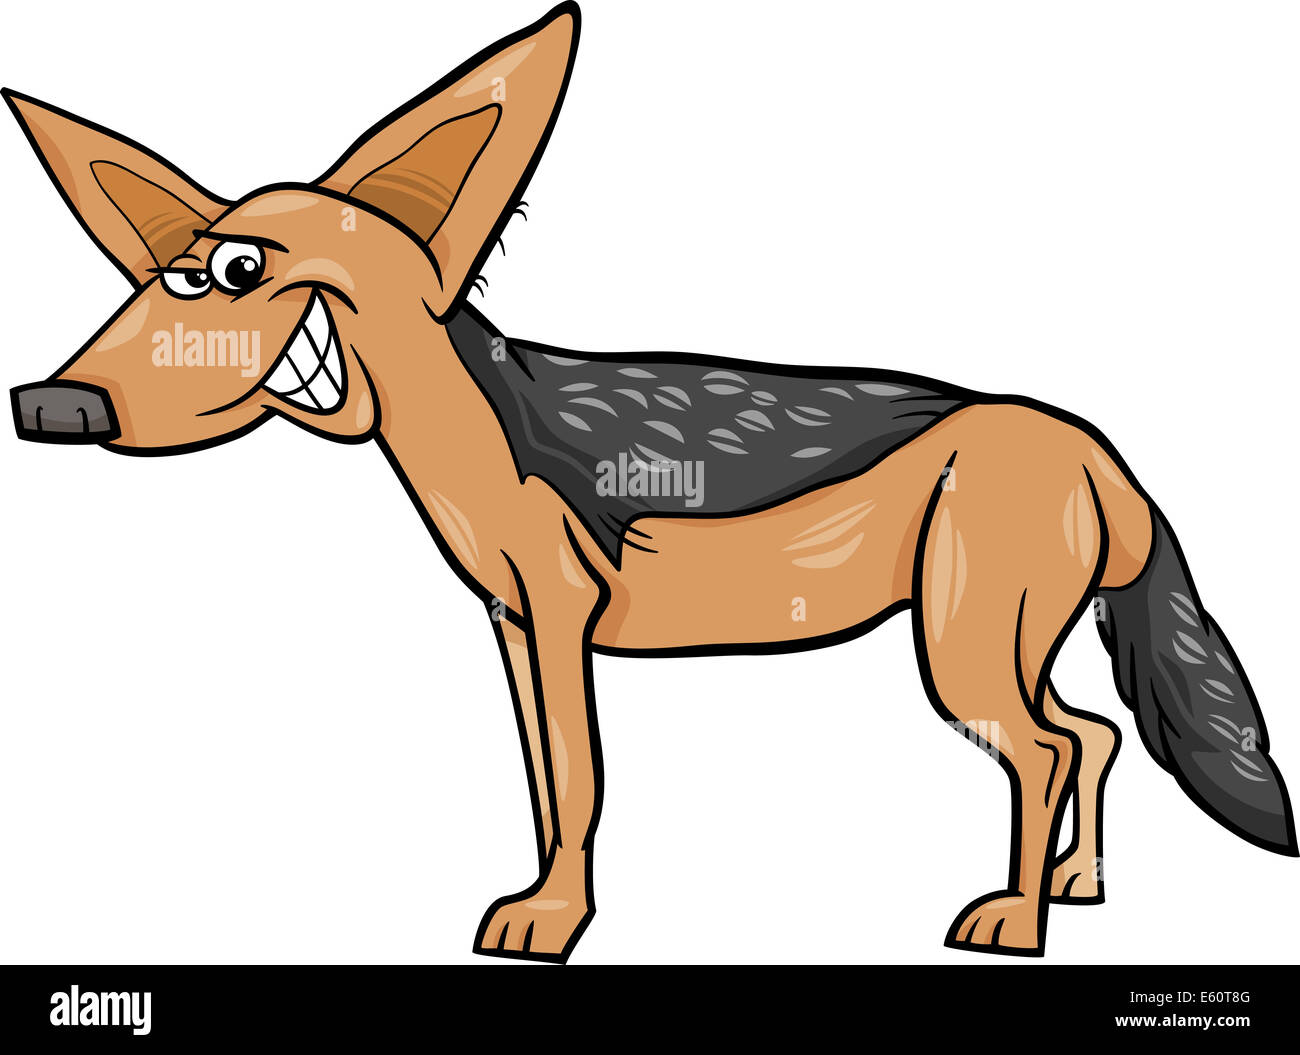 Cartoon Illustration of Funny Jackal Wild Animal Stock Photo